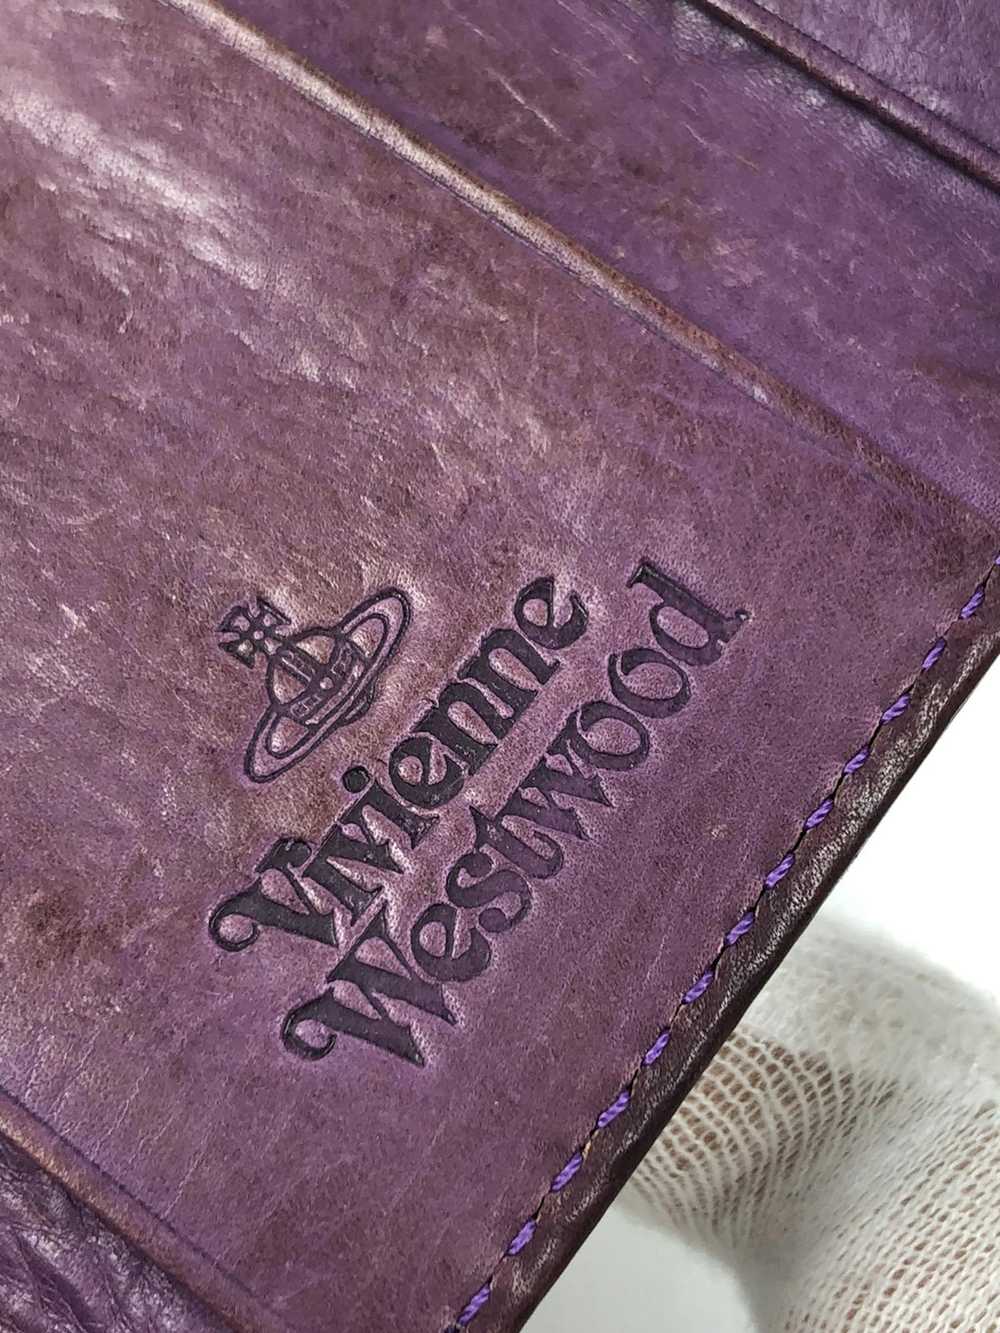 Vivienne Westwood Orb leather key holder - image 3